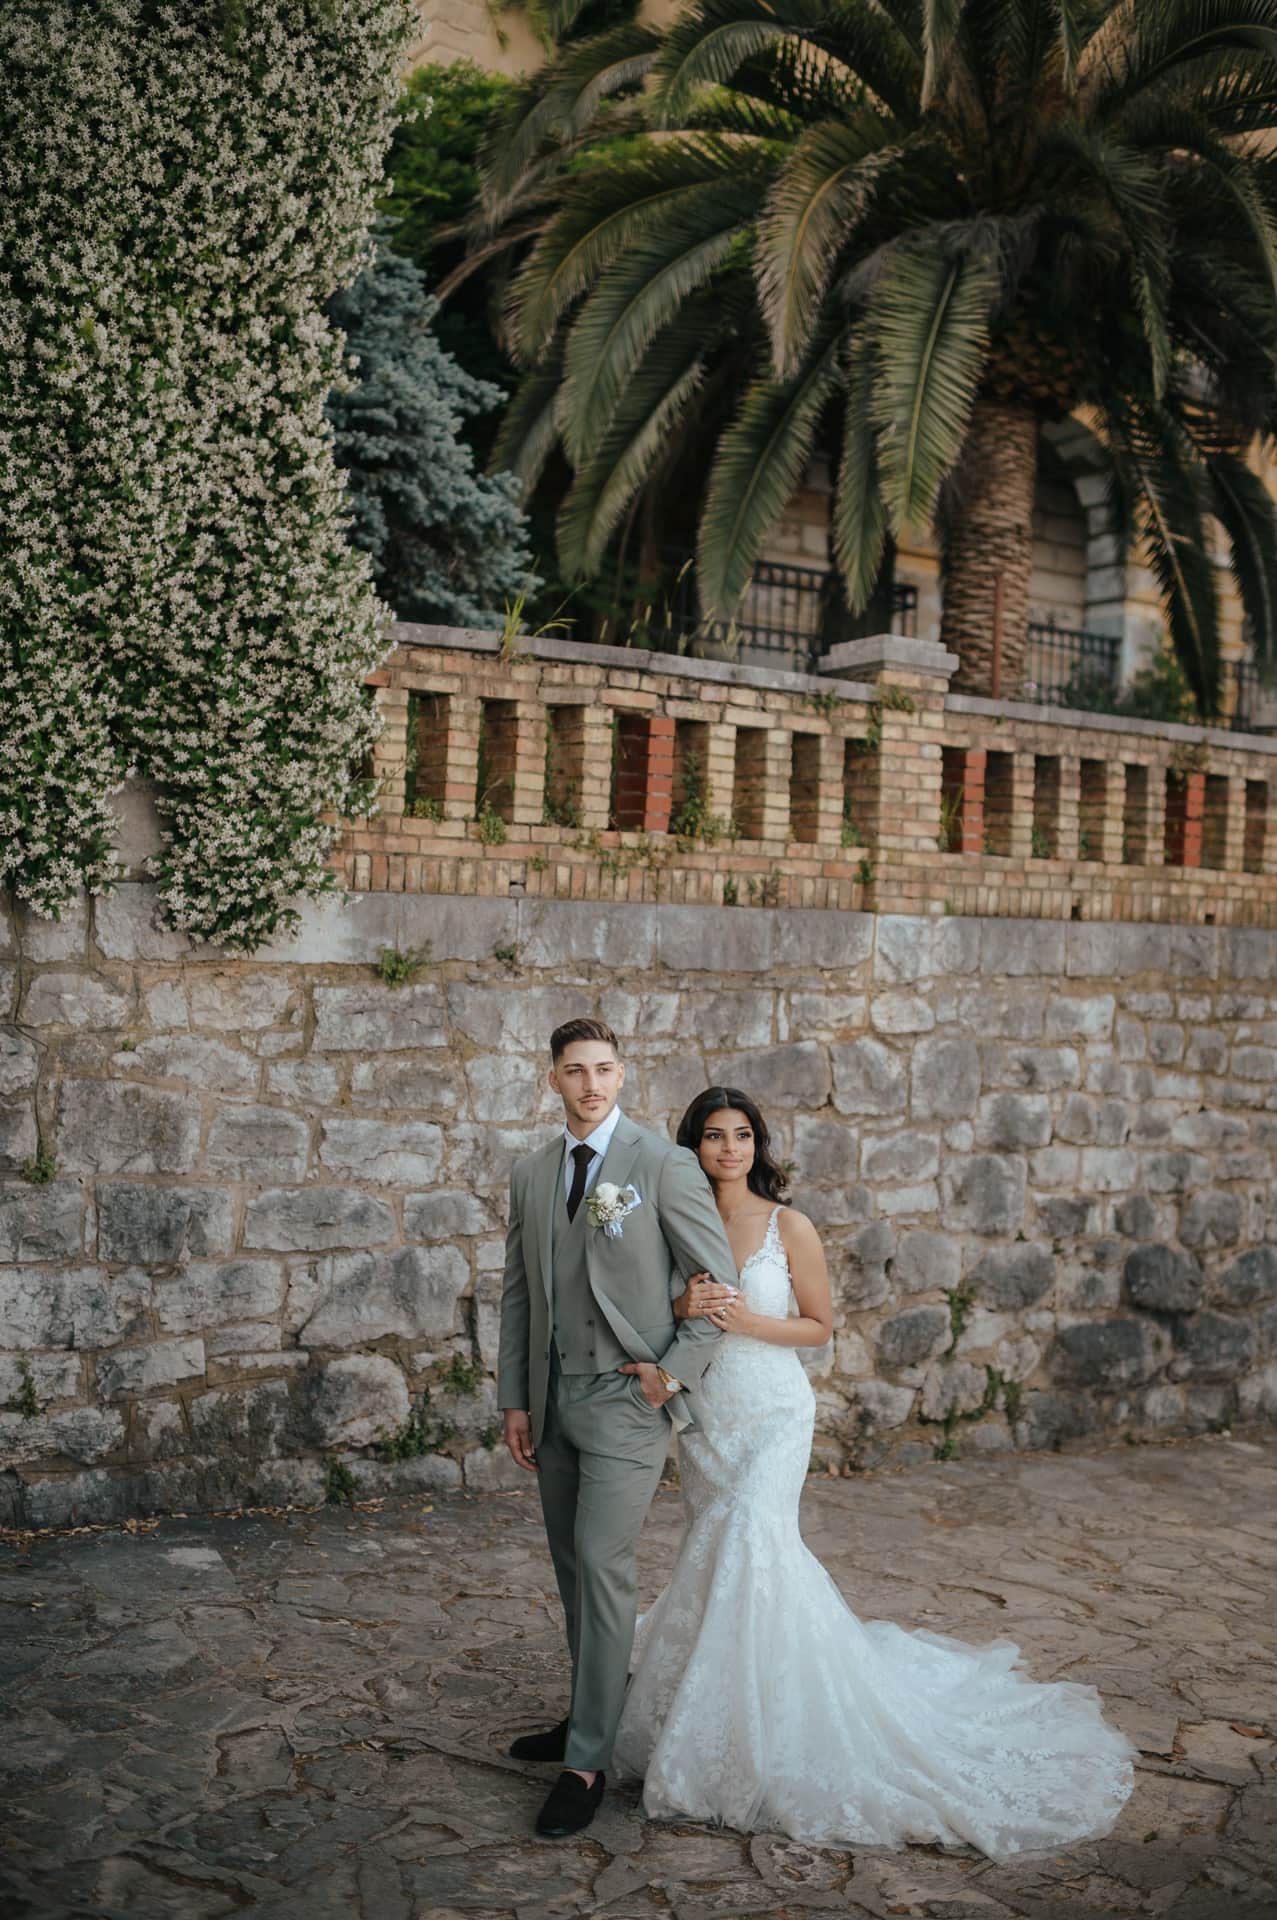 Opatija wedding photography and videography